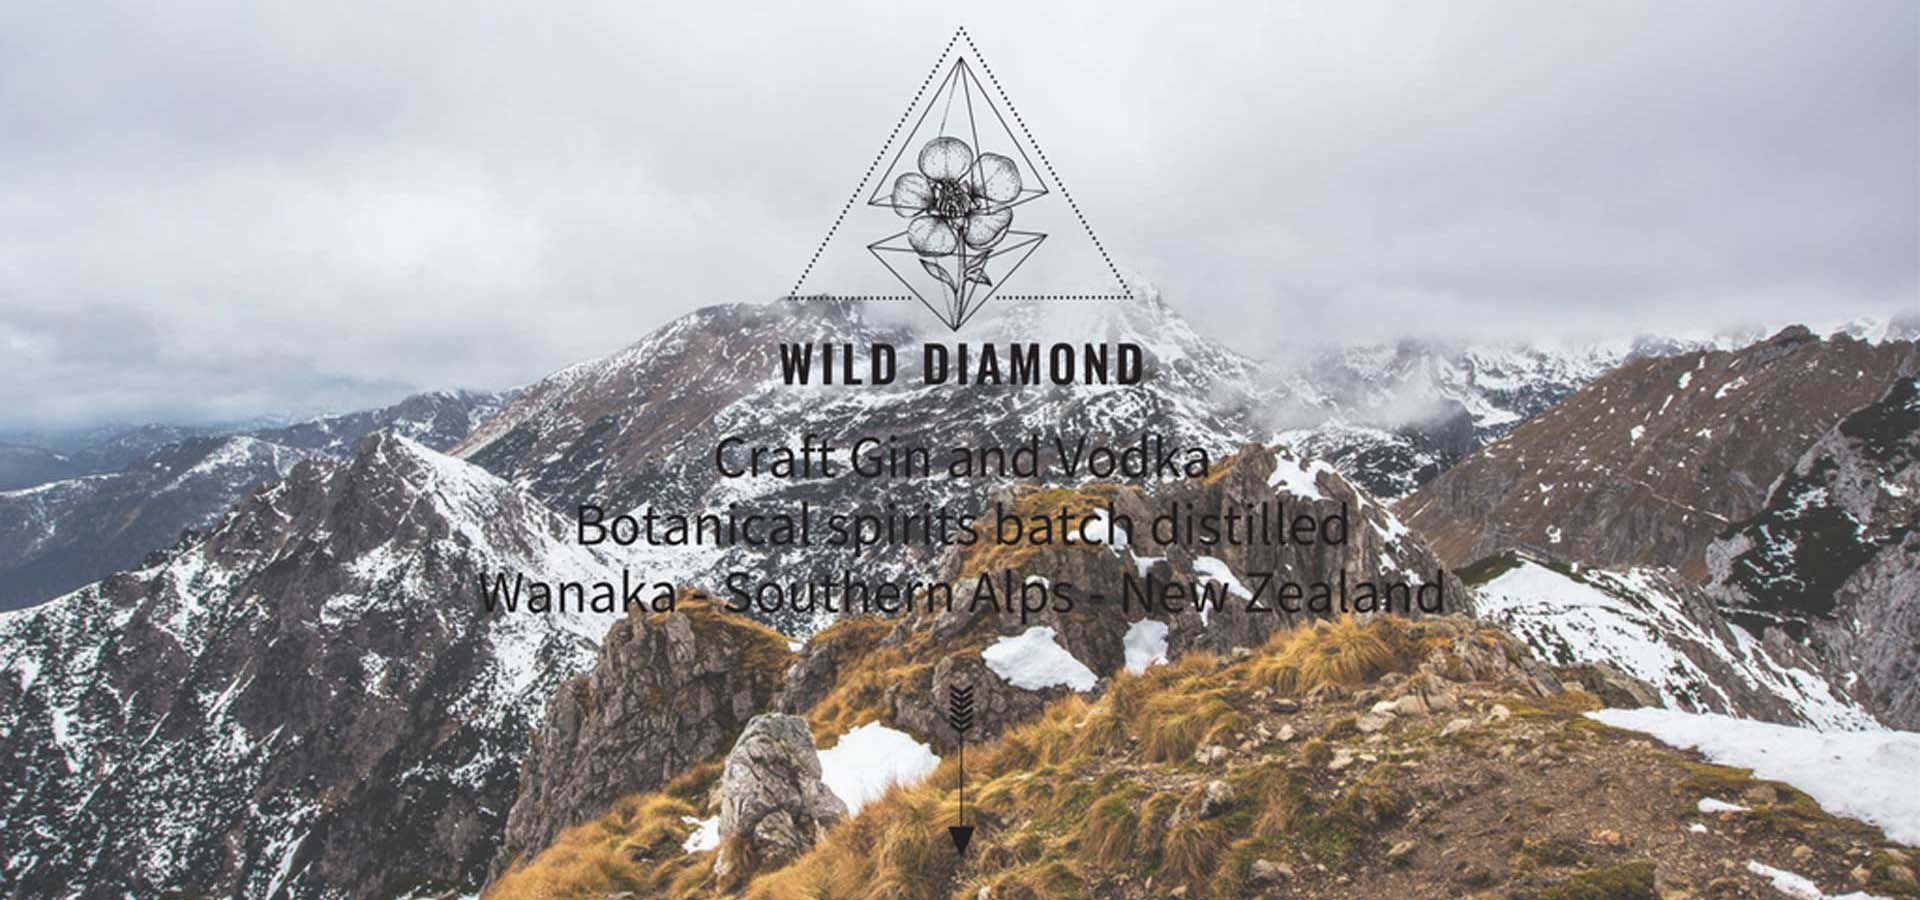 Wild Diamond – Craft Gin and Vodka